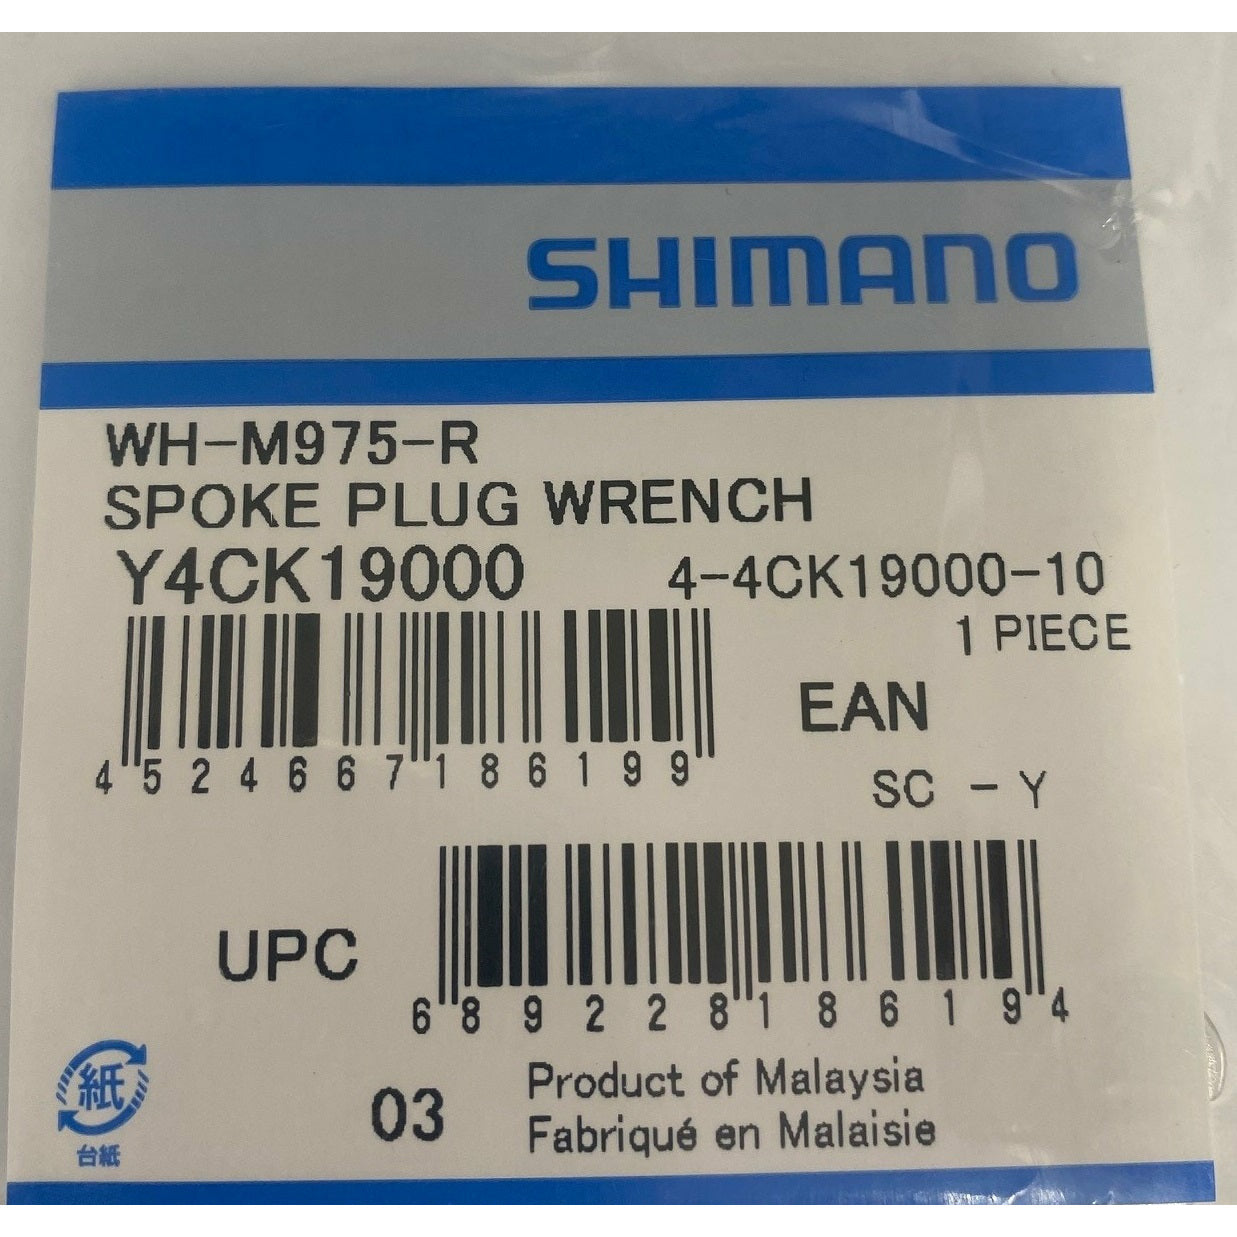 SHIMANO WH-M975-R Spoke Plug Wrench Y4CK19000